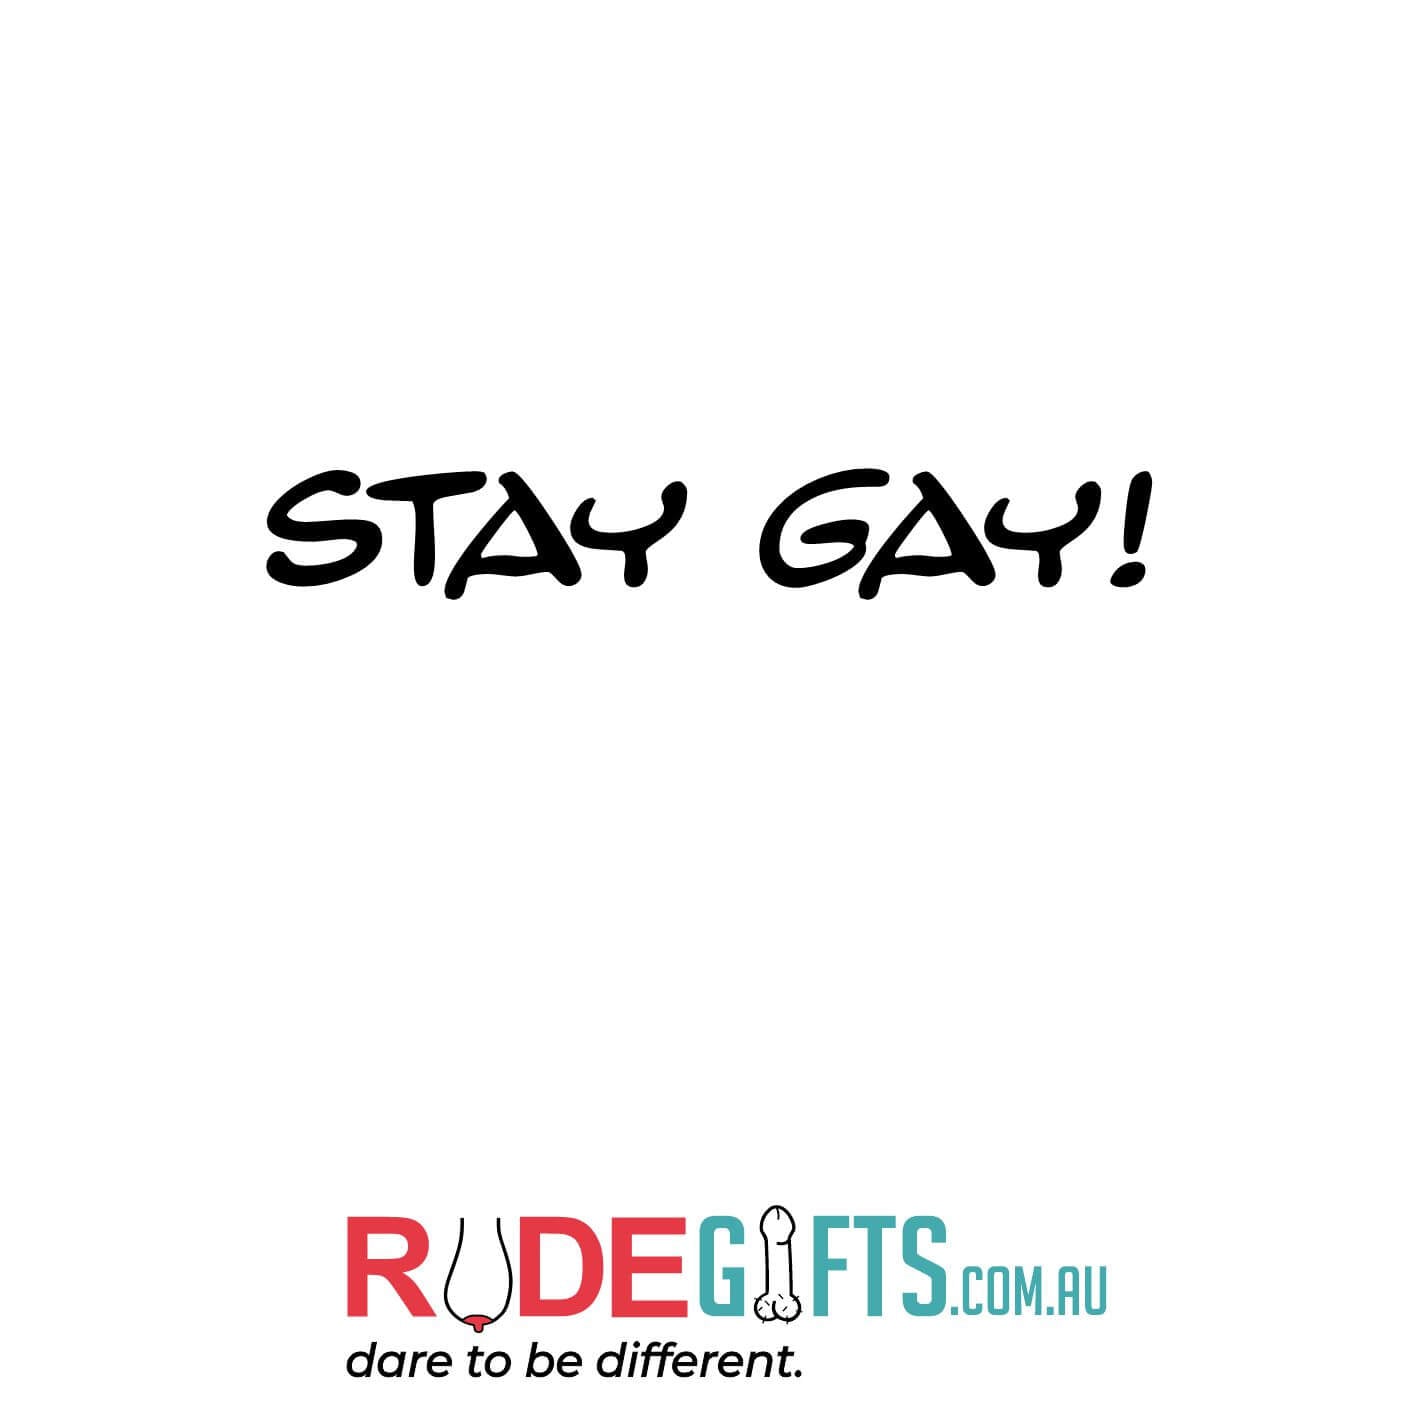 Stay Gay! - 0